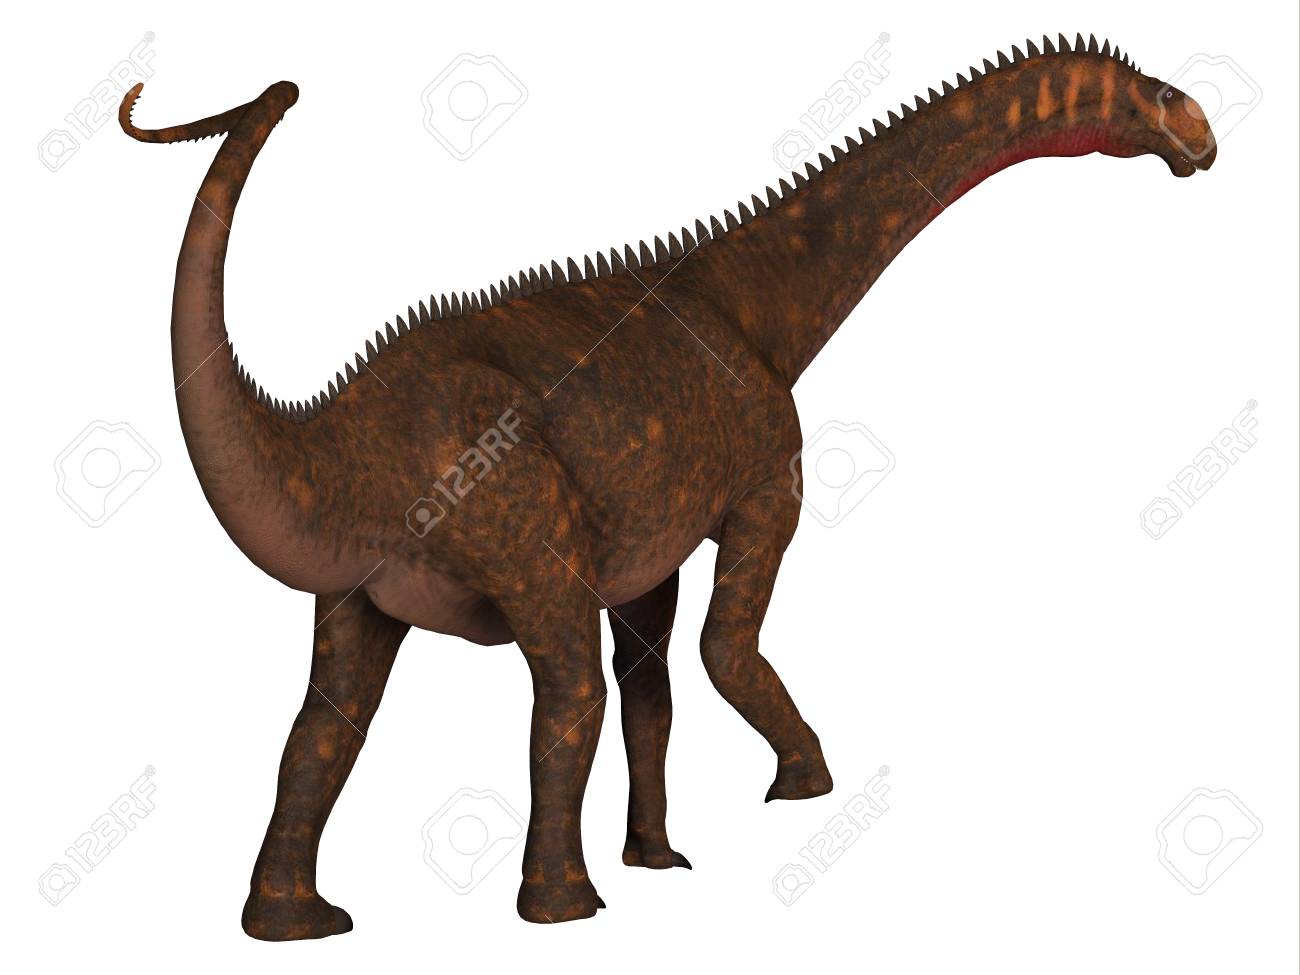 105257245-mierasaurus-was-a-herbivorous-sauropod-dinosaur-that-lived-in-utah-usa-during-the-cr...jpg